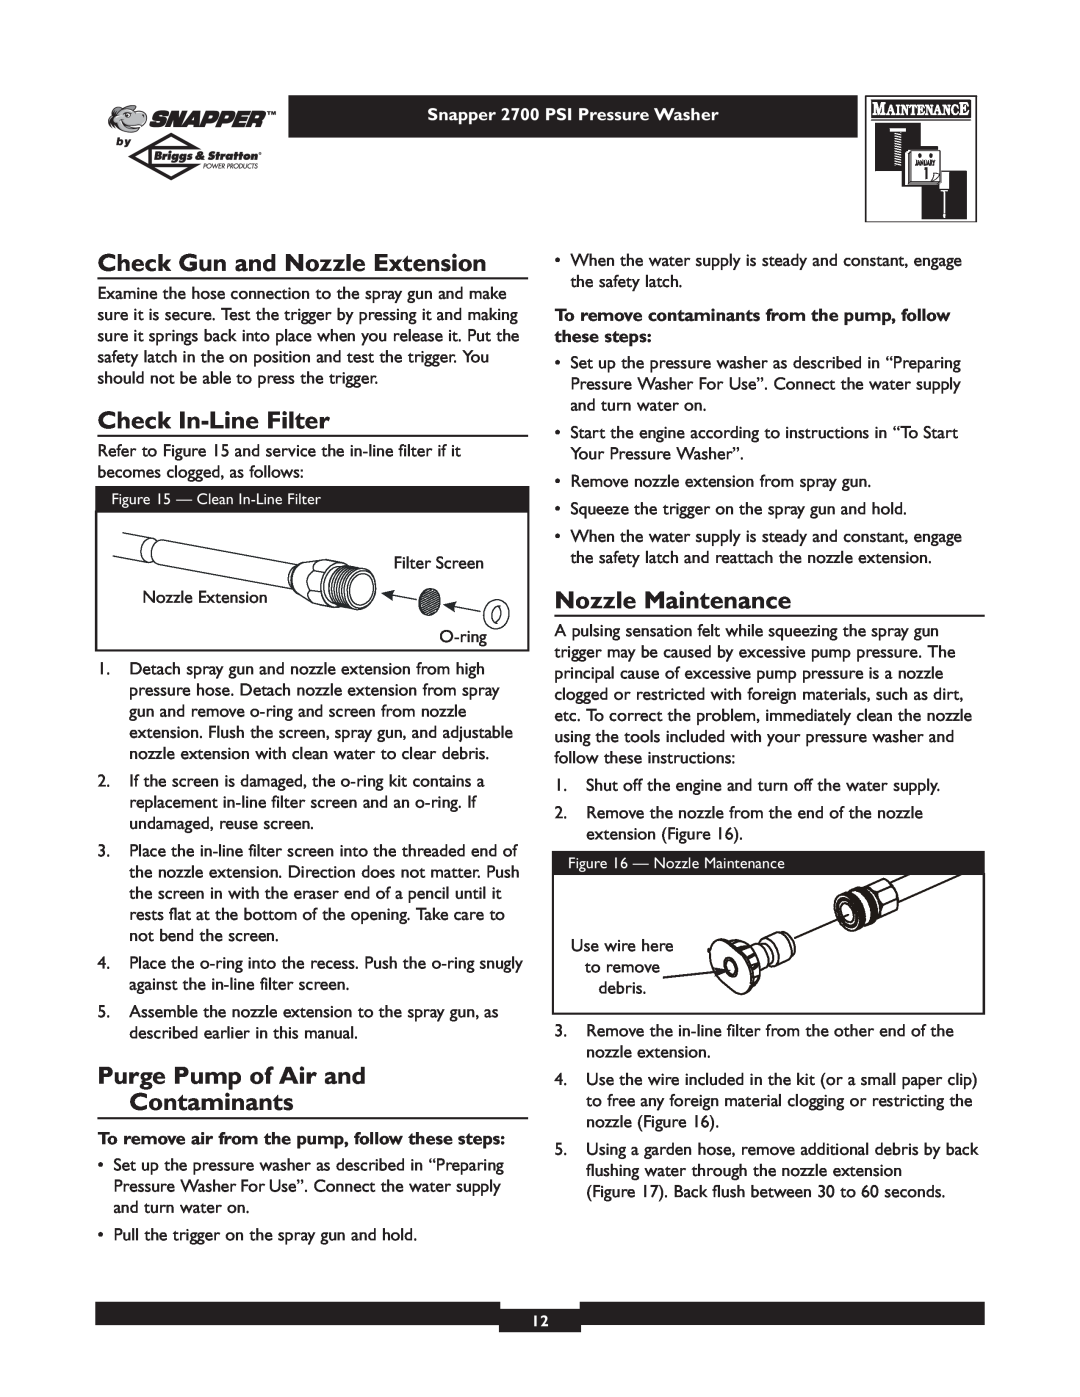 Briggs & Stratton 2700PSI owner manual Check Gun and Nozzle Extension, Check In-Line Filter, Nozzle Maintenance 